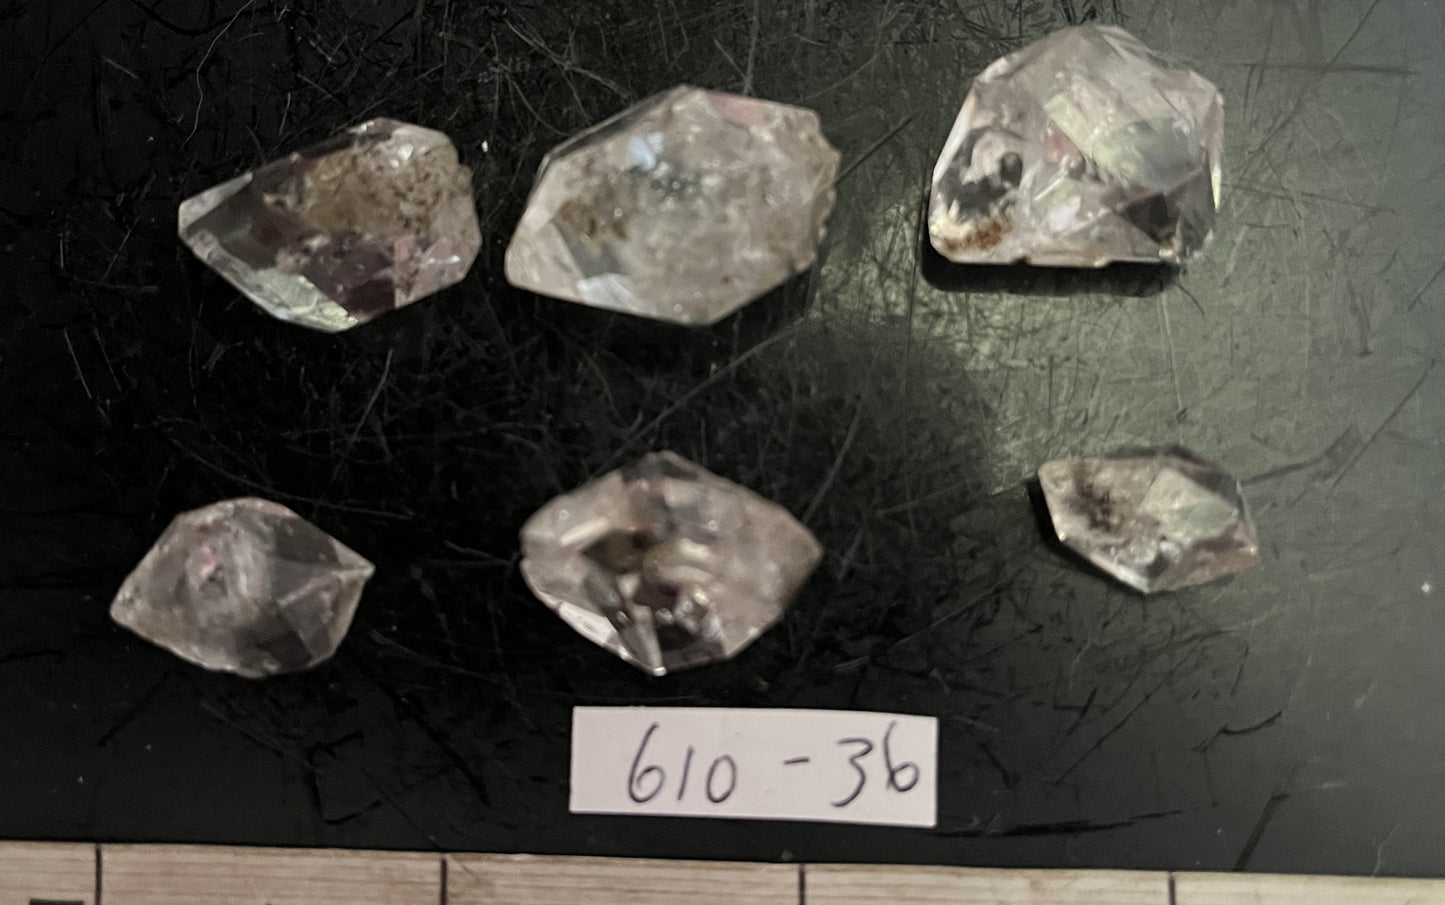 Herkimer Diamond Lot 610-36